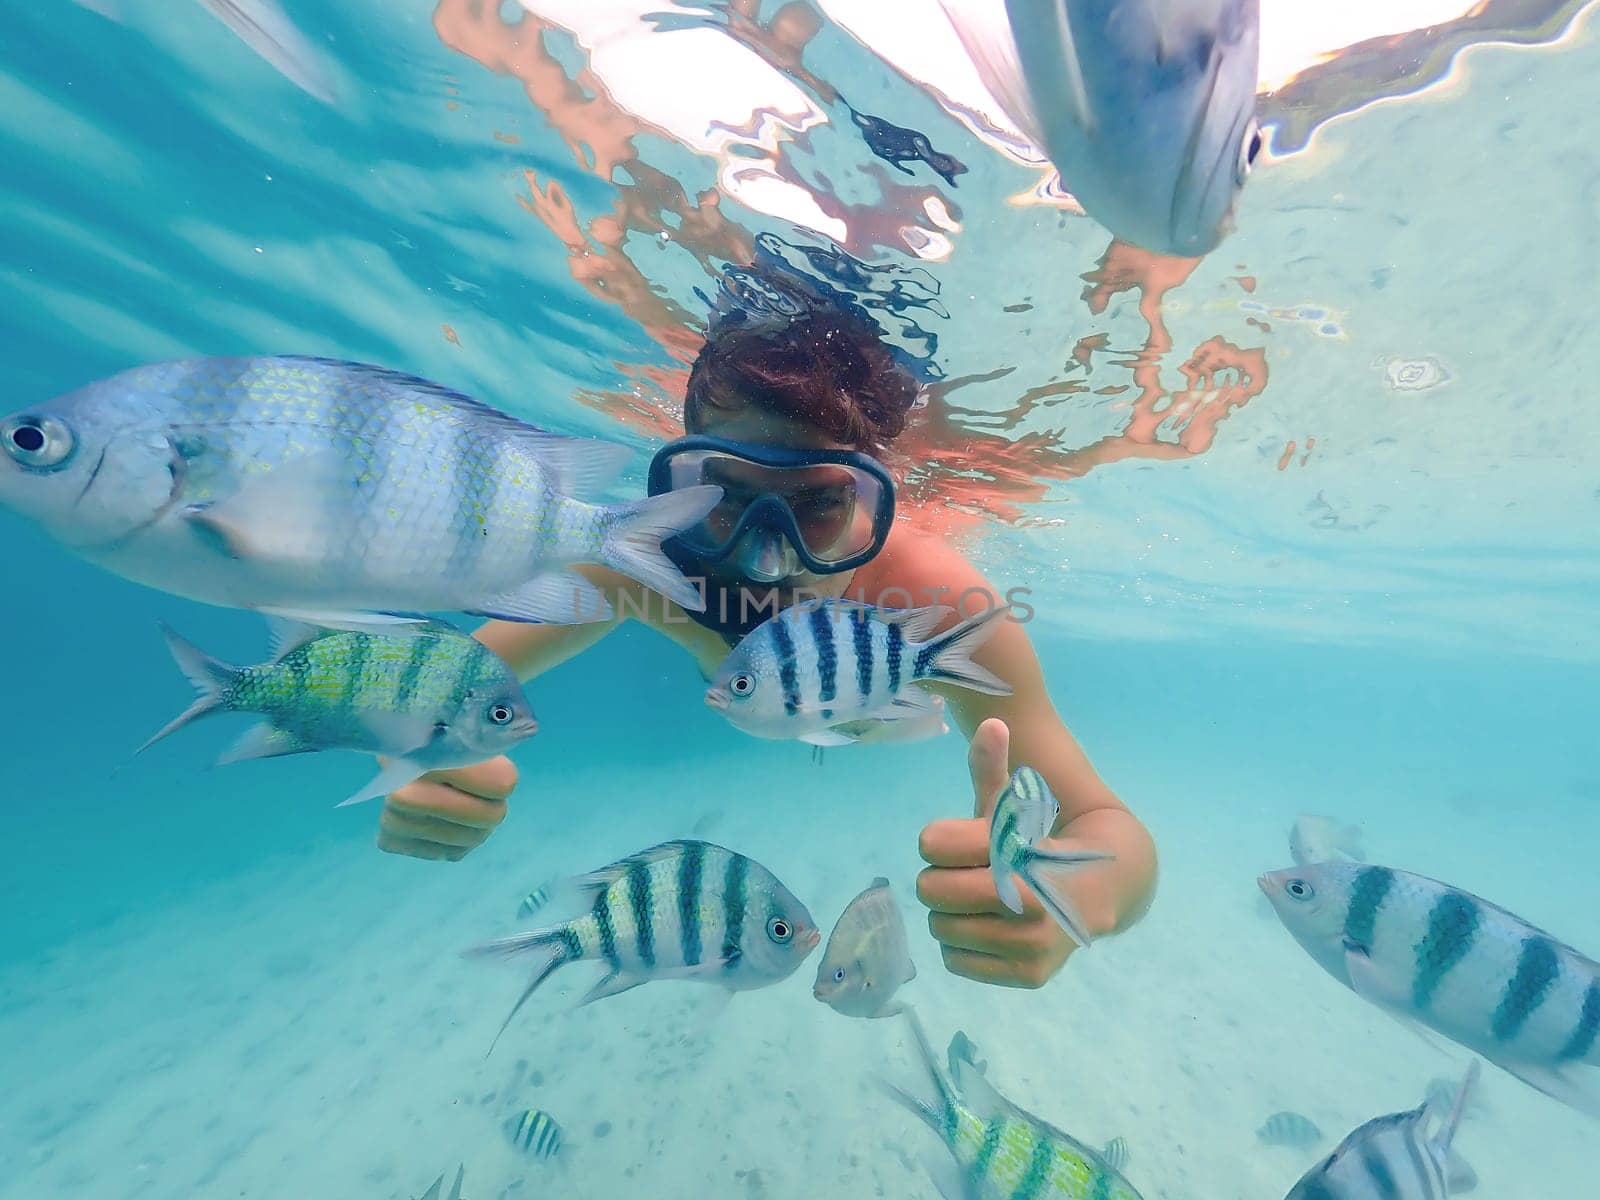 snorkeling trip at Samaesan Thailand dive underwater with fishes in the coral reef sea pool by fokkebok